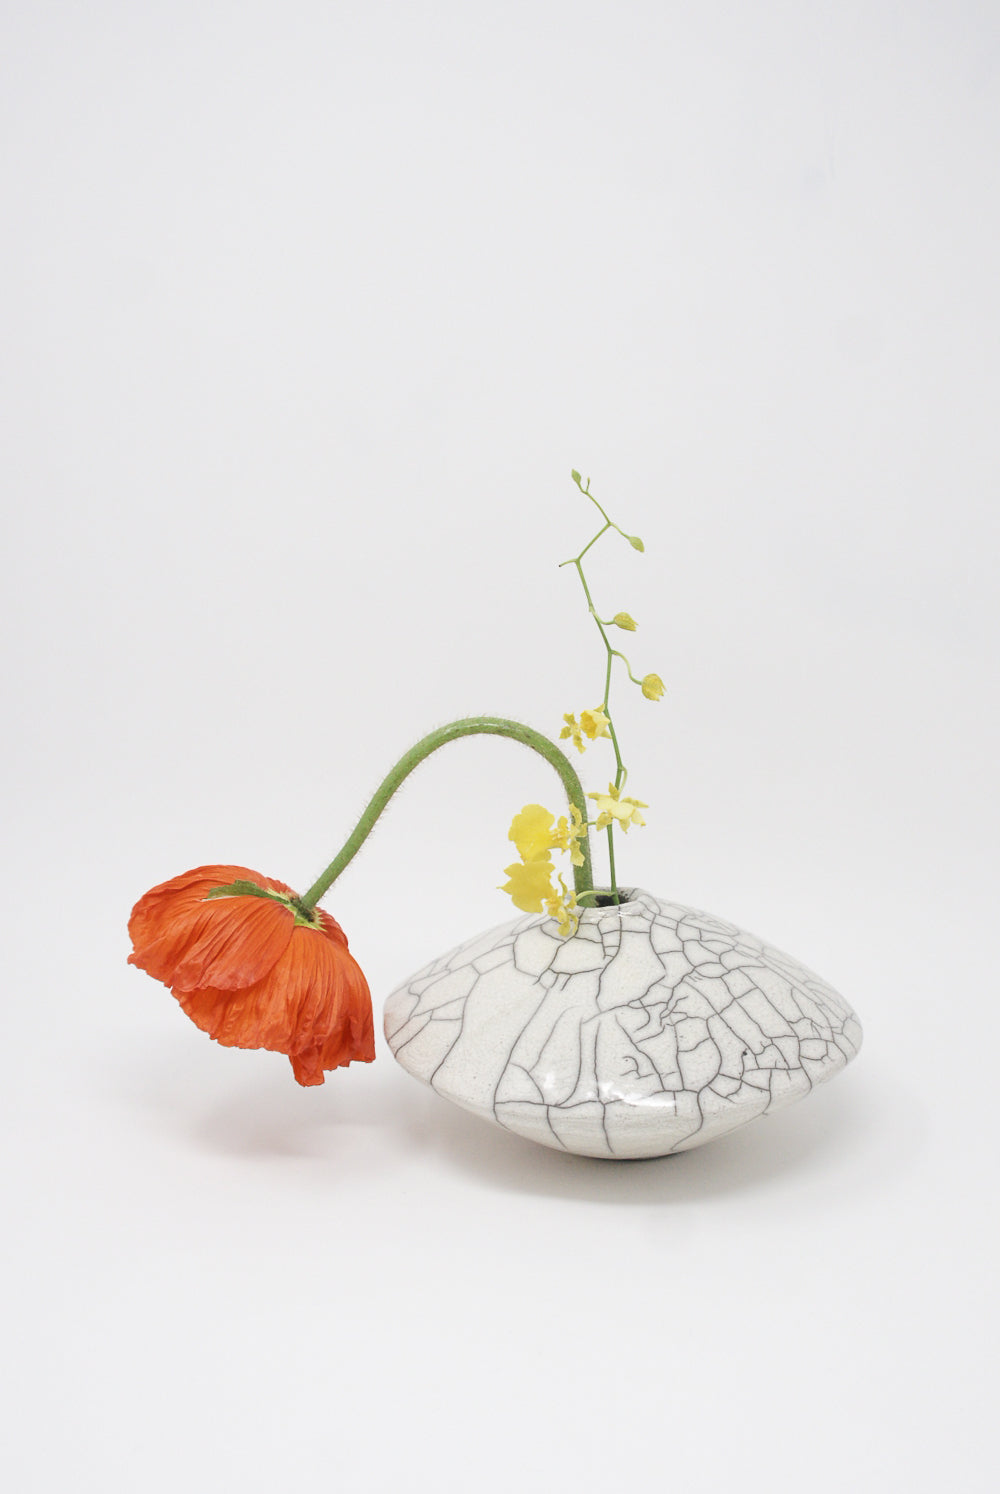 MONDAYS - Ikebana Vase in Raku-Fired Stoneware with flowers